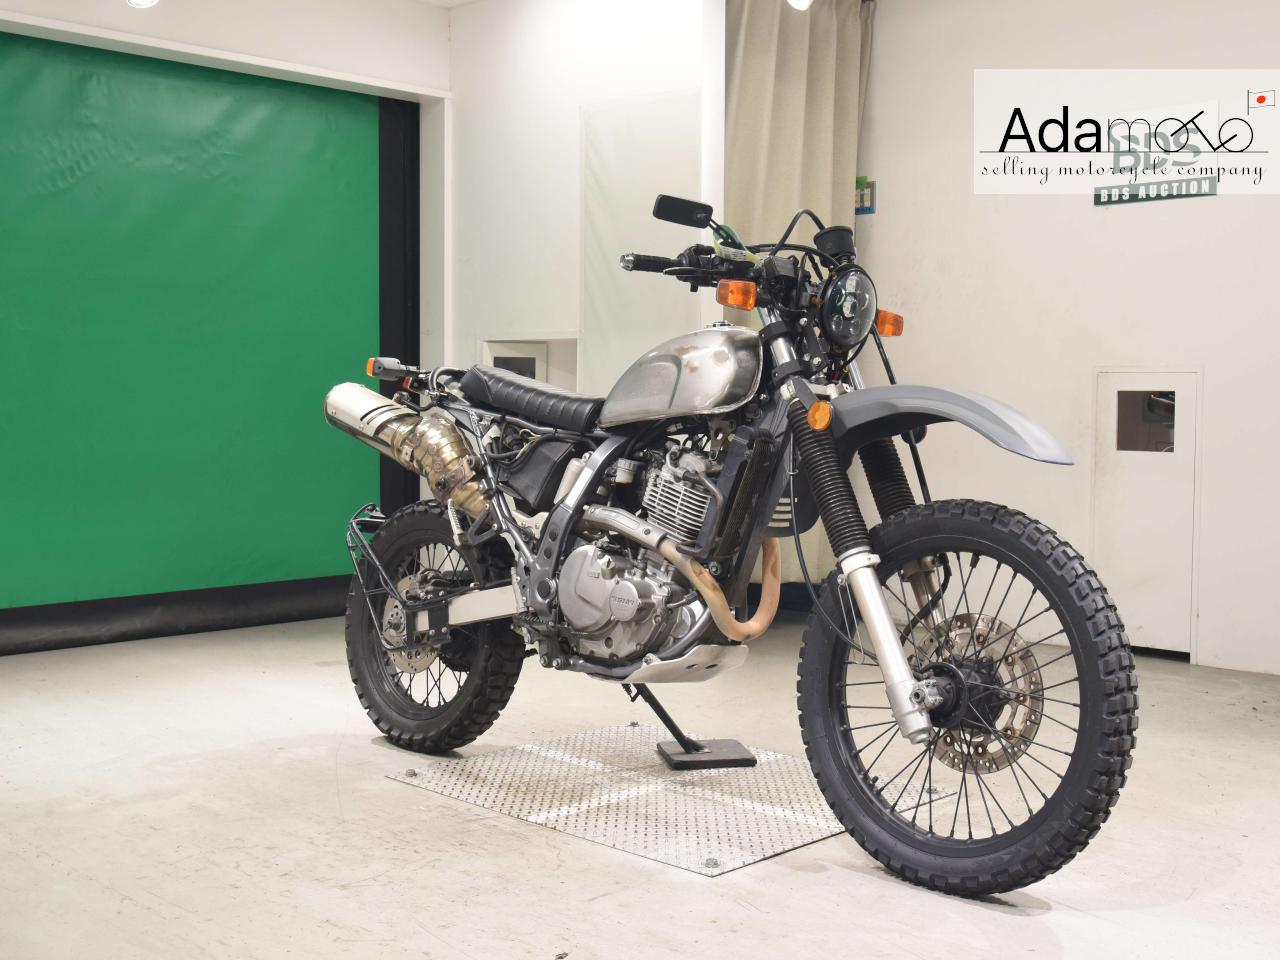 Suzuki DR650 - Adamoto - Motorcycles from Japan